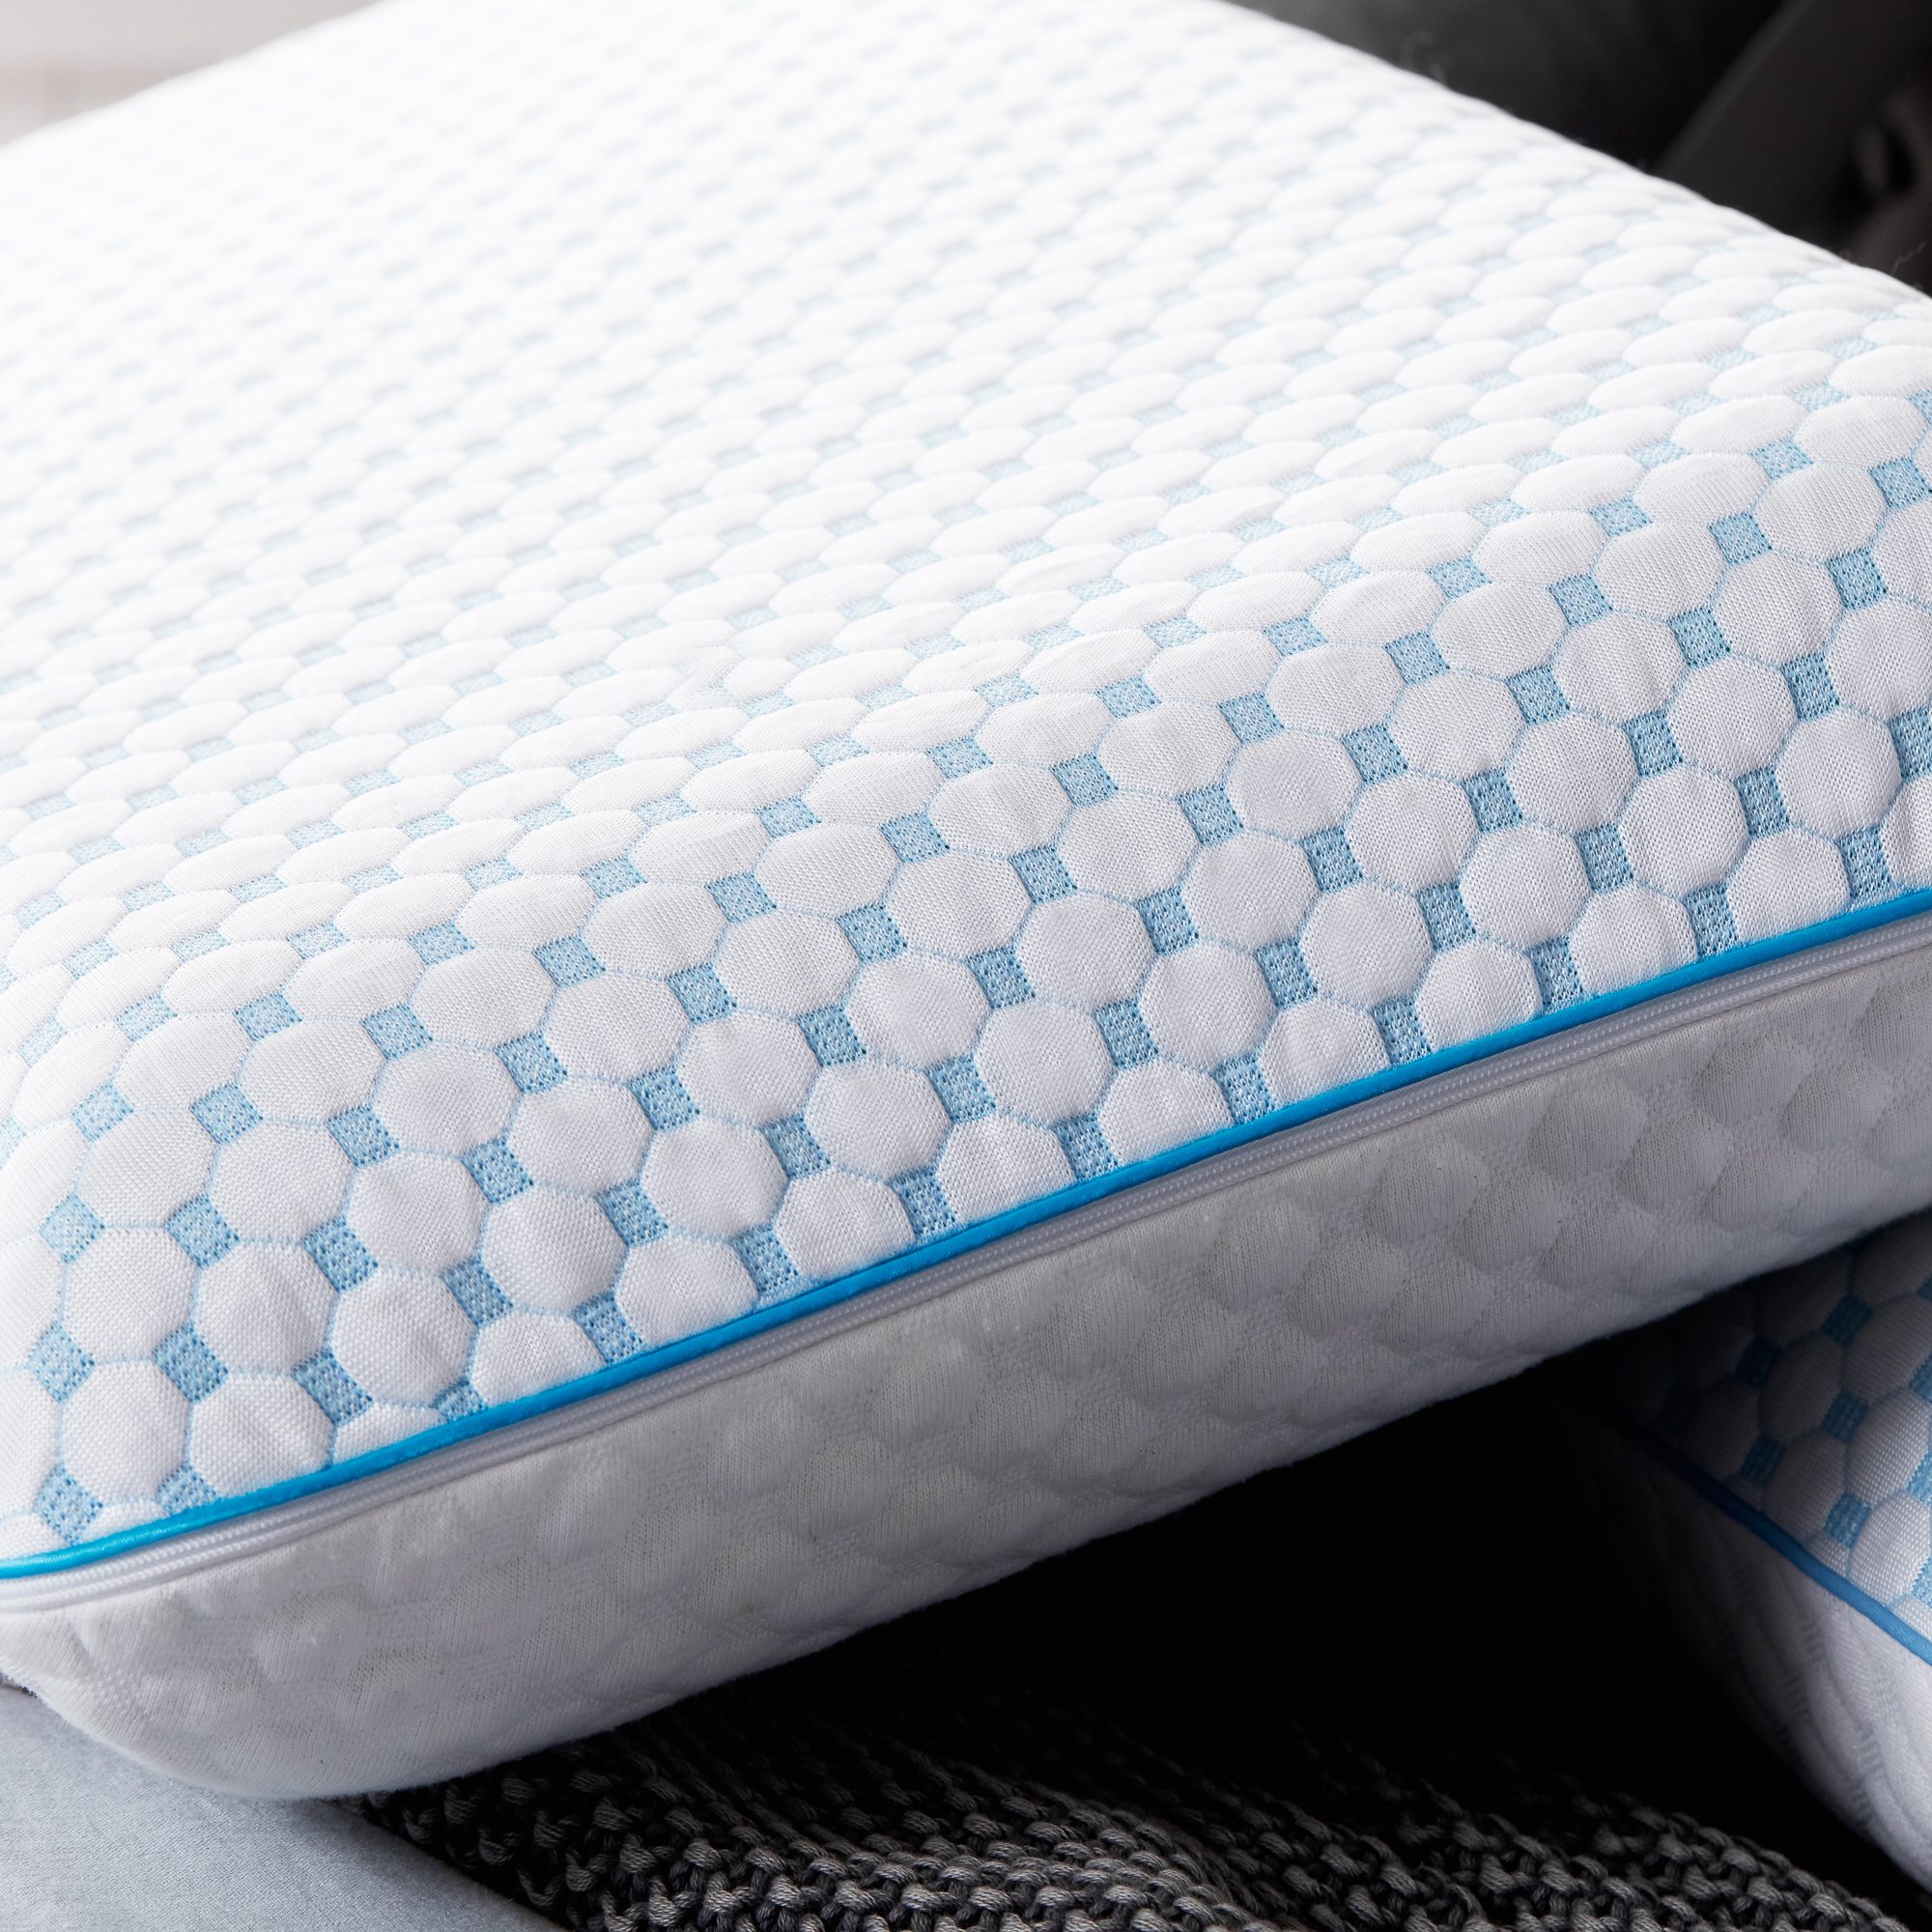 Is gel memory foam a cooling pillow? - Quora